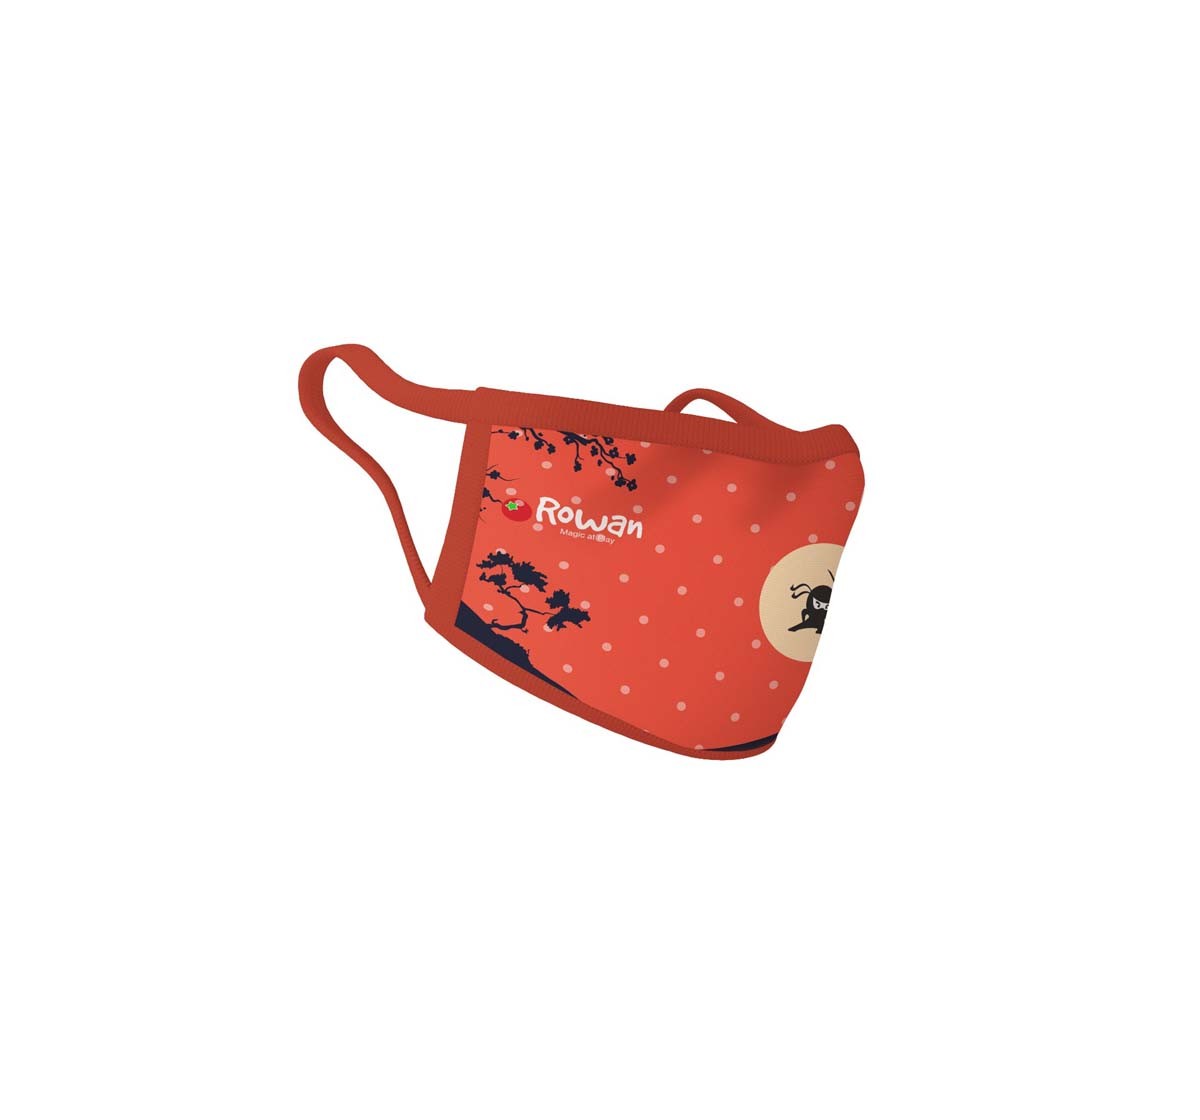 Rowan Ninja Face Mask - Pack Of 1 Impulse Toys for Kids Age 4Y+ (Orange)